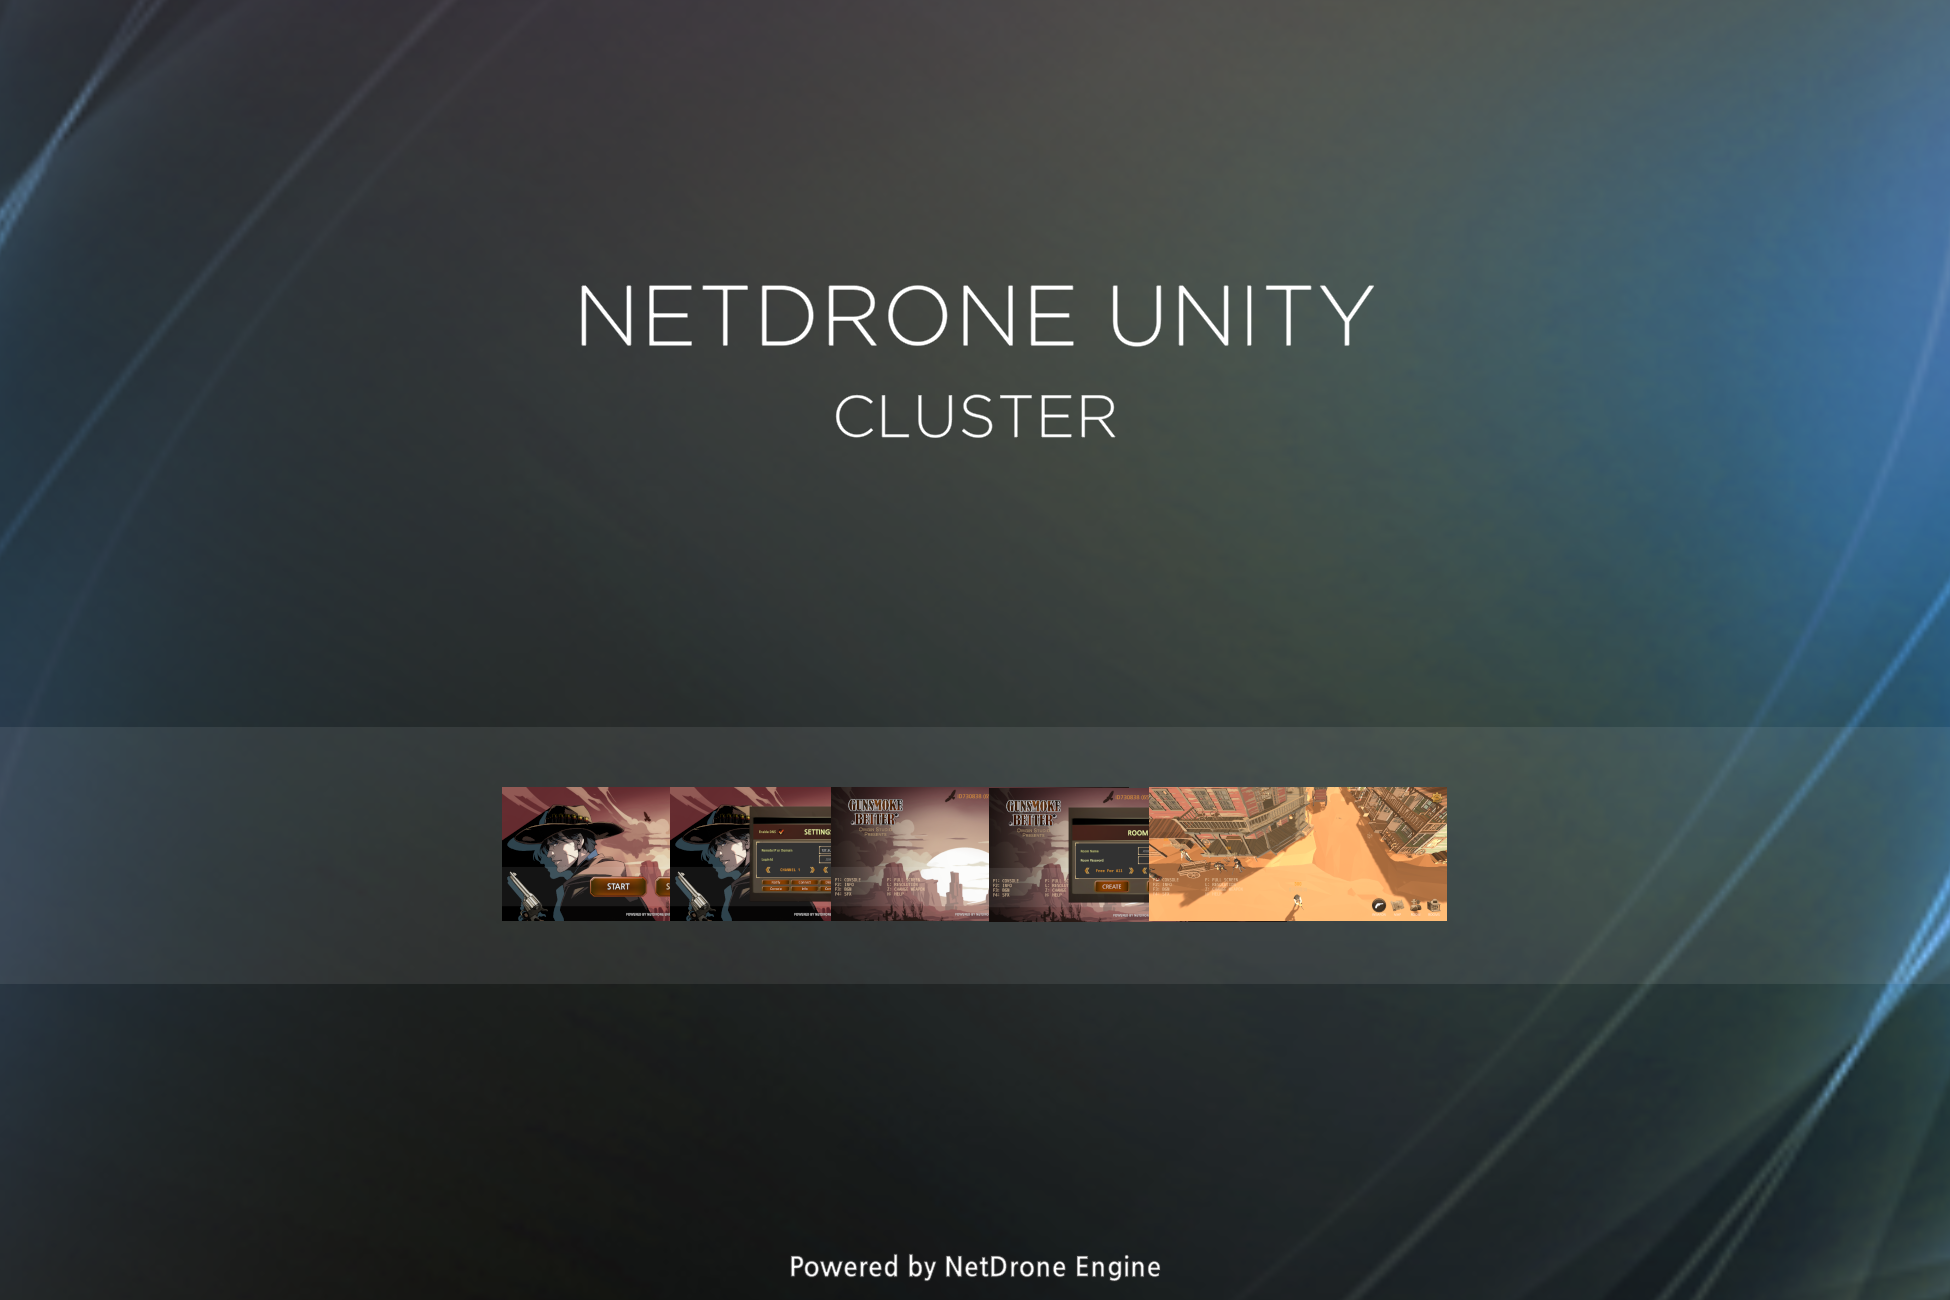 NetDrone Unity